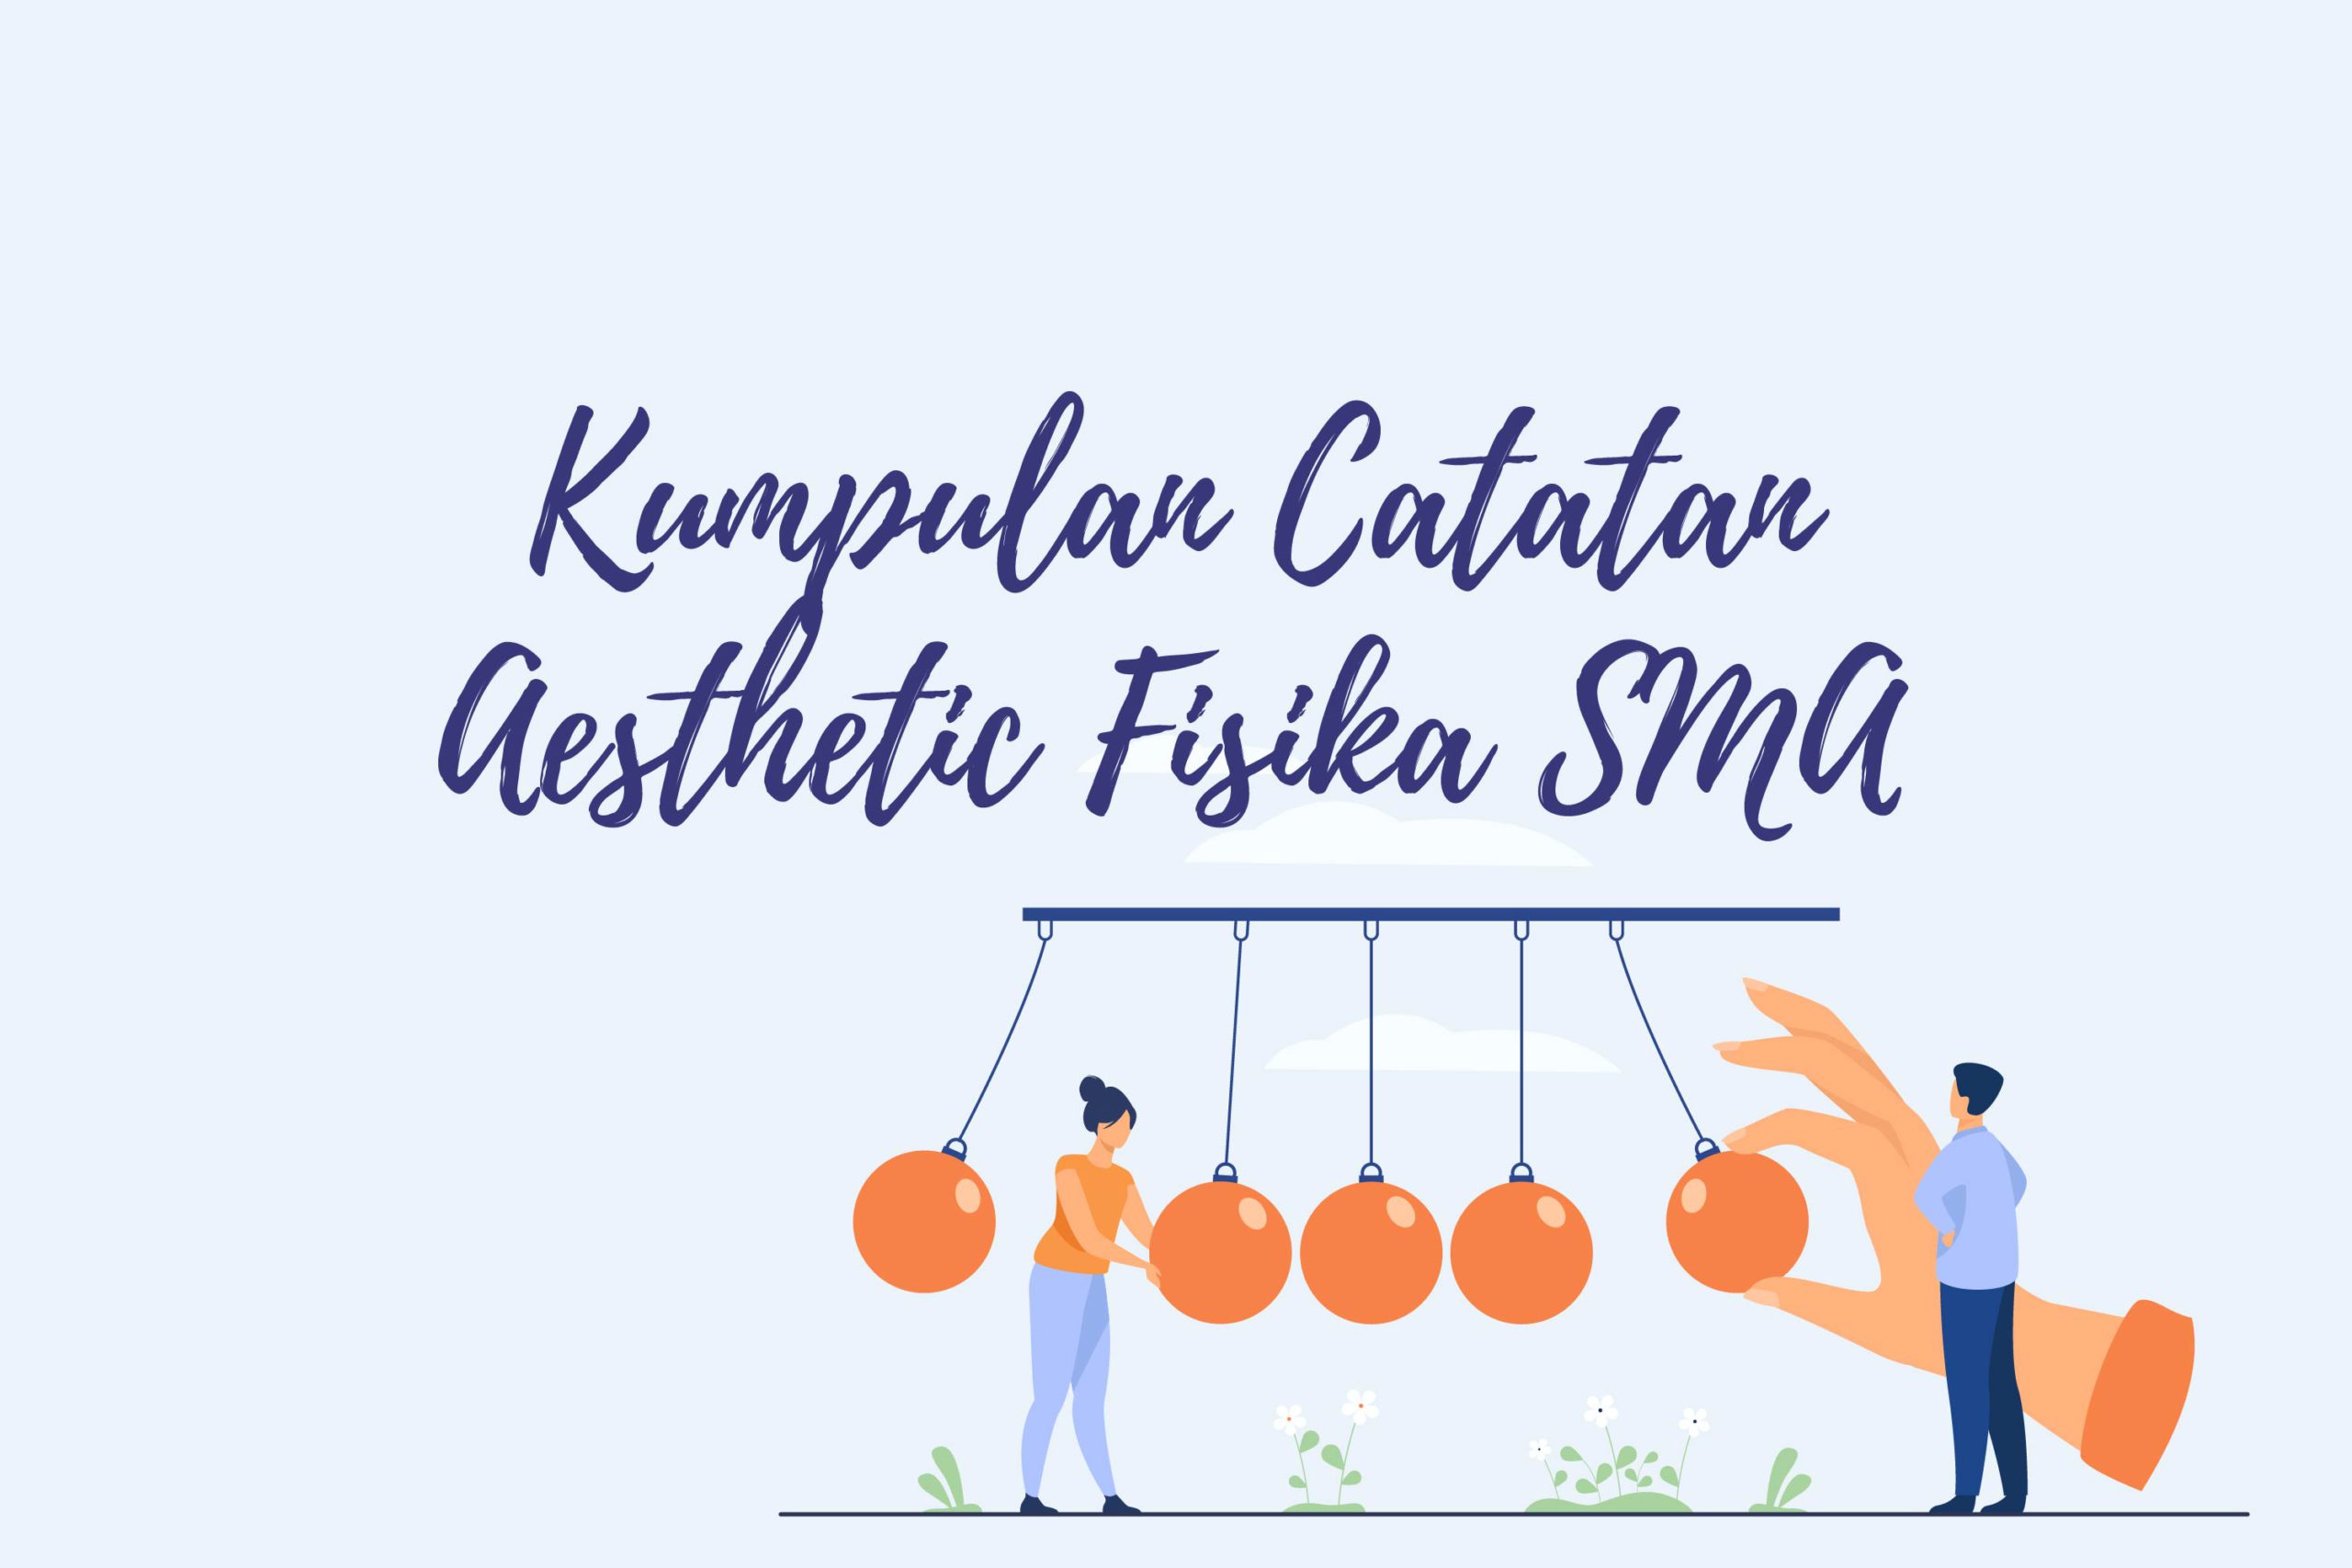 Kumpulan Catatan Aesthetic Fisika SMA - Clear Indonesia News